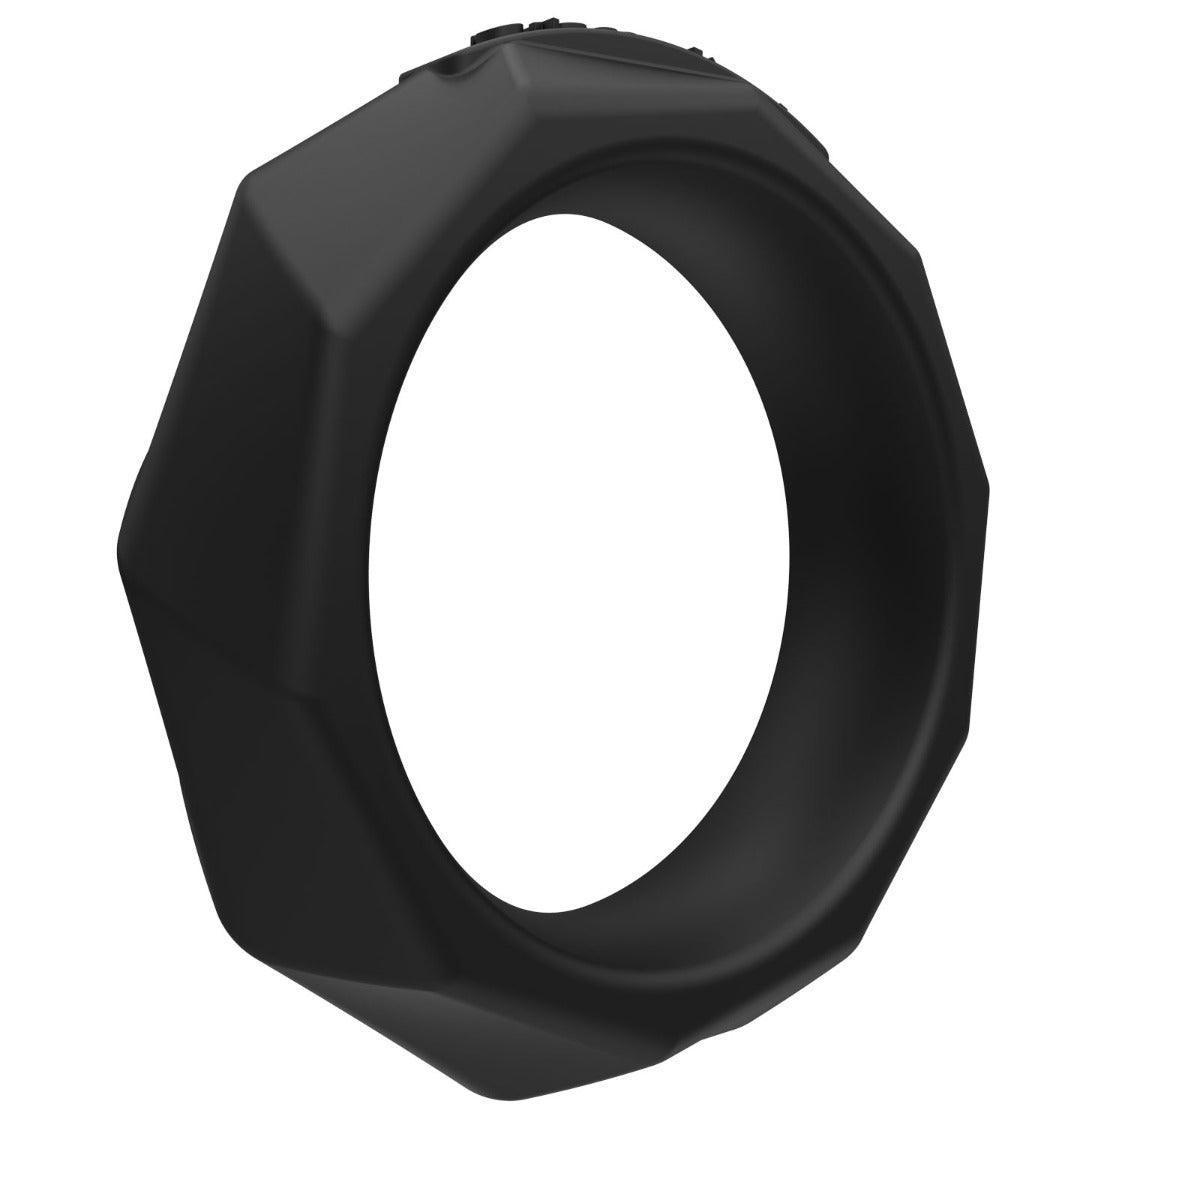 Bathmate Power Ring - Maximus 55 Black Cock Ring